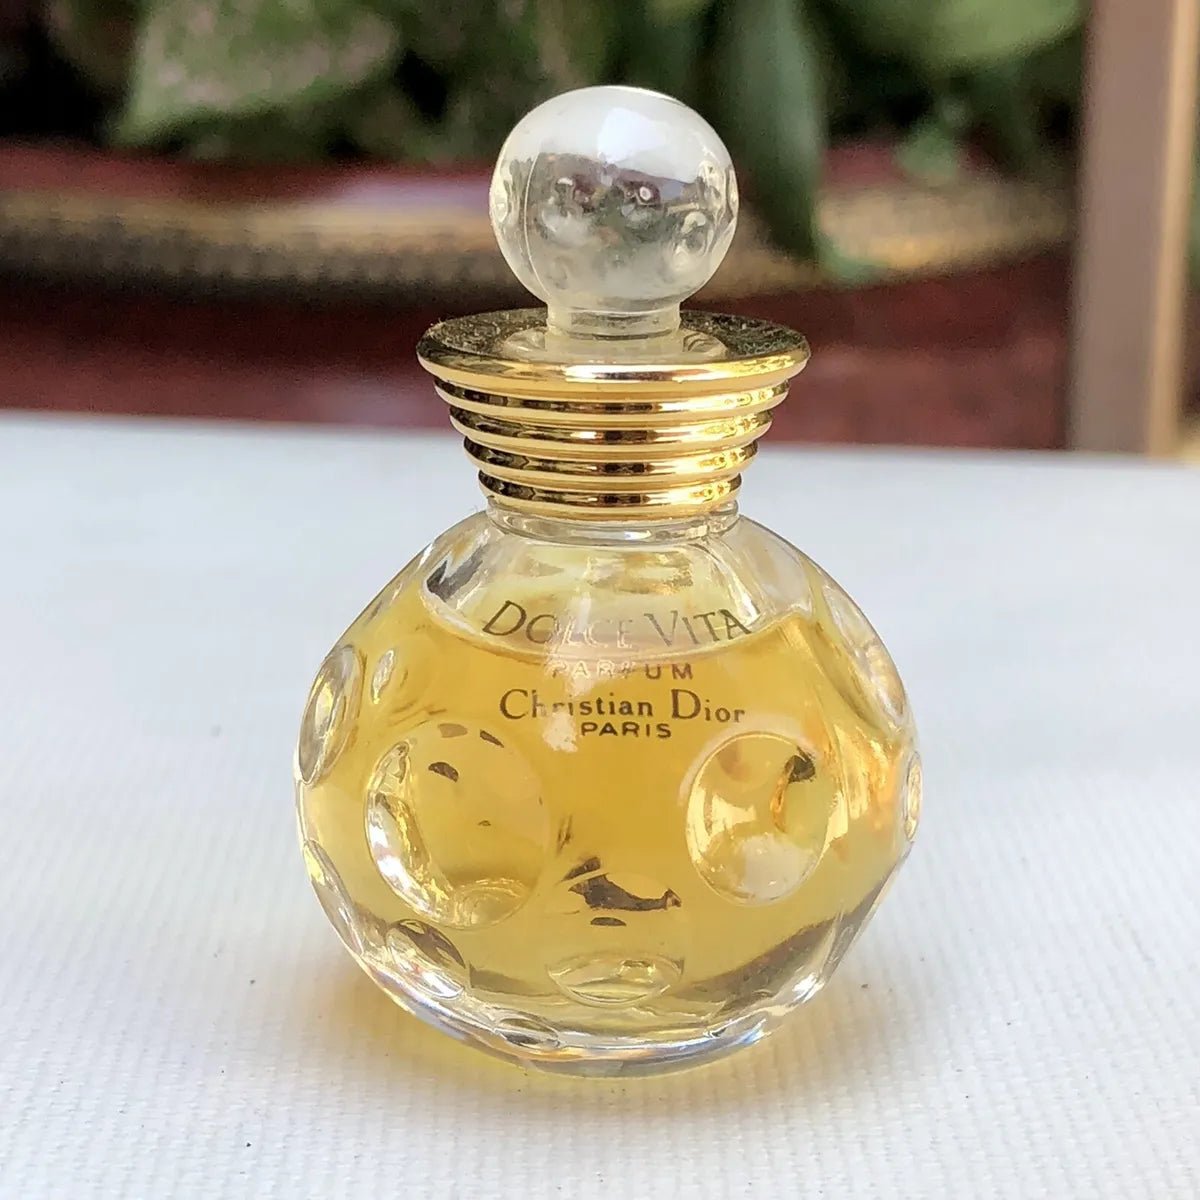 Dior Dolce Vita EDT | My Perfume Shop Australia